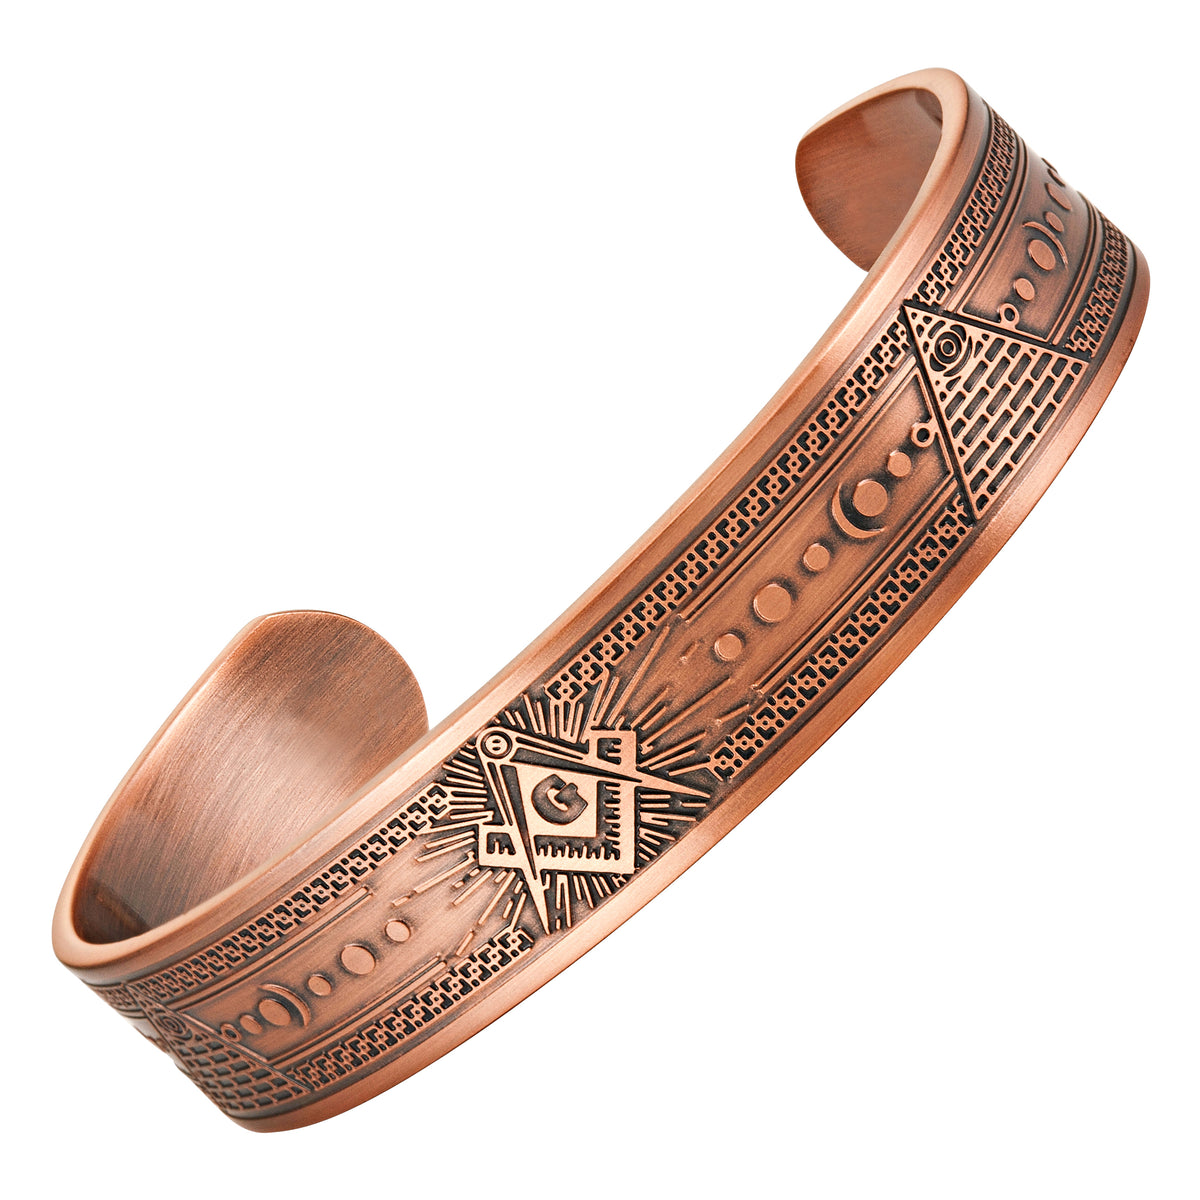 MasonicMan Engraved Pure Copper Bangle Bracelet (Non-Magnetic)